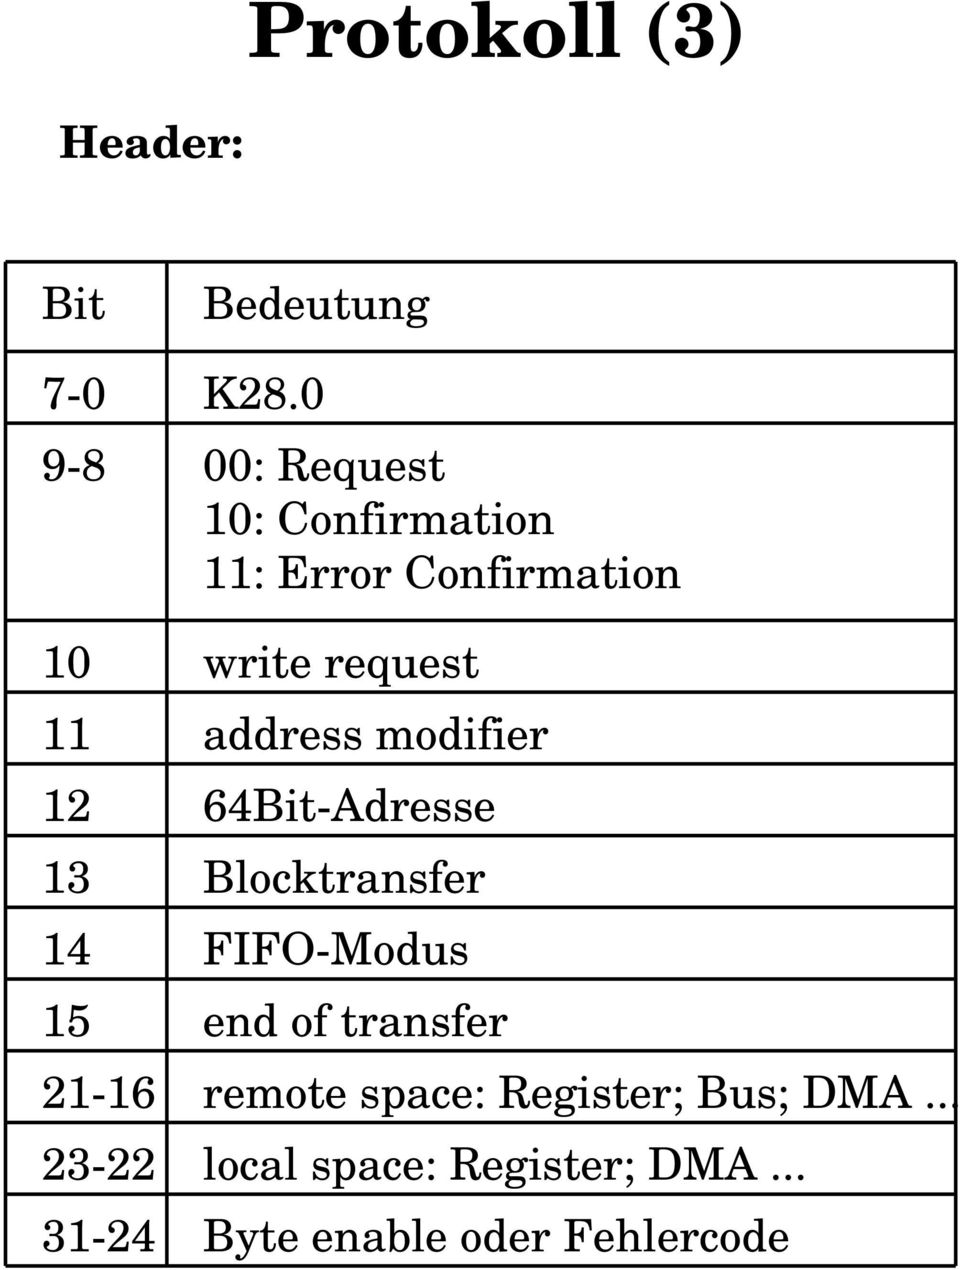 21-16 23-22 31-24 write request address modifier 64Bit-Adresse Blocktransfer